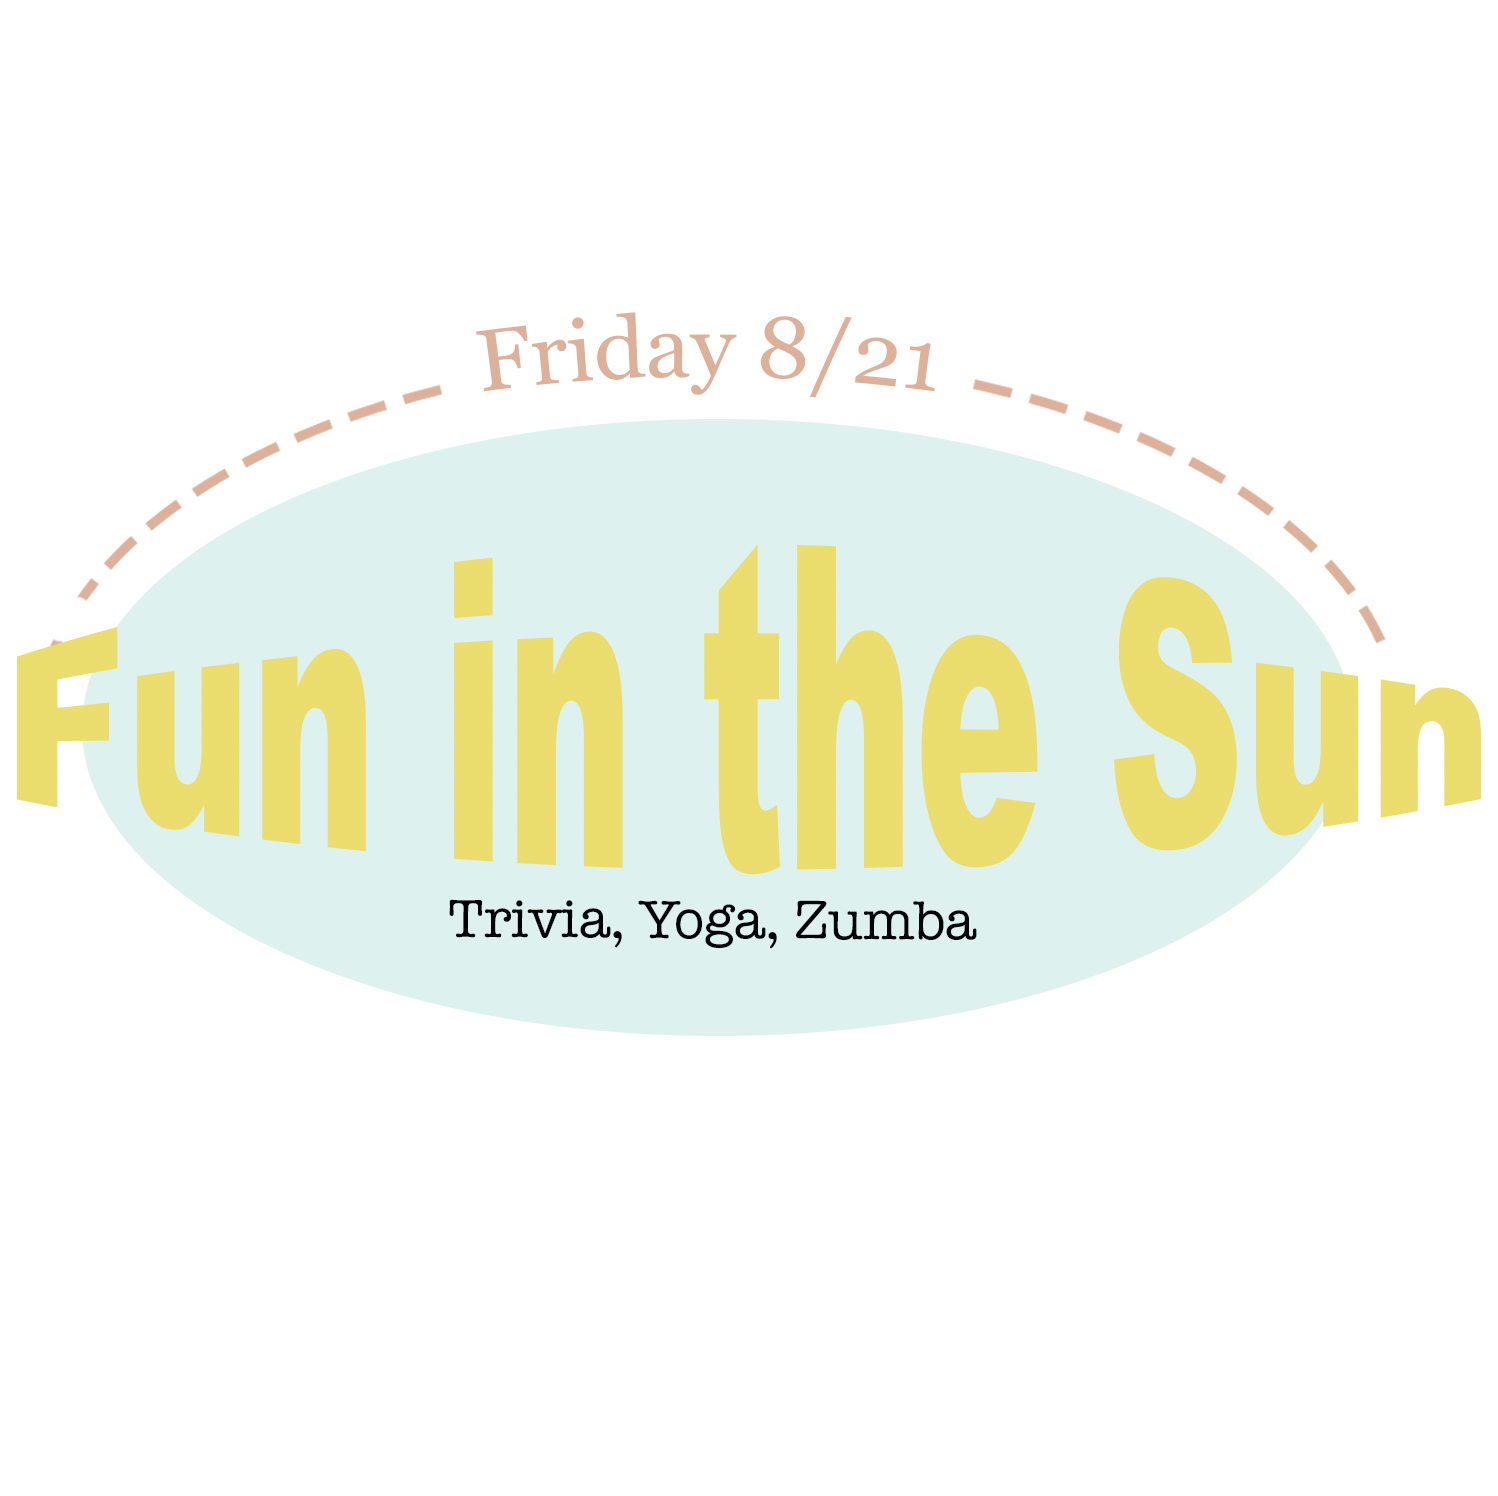 Fun in the Sun logo